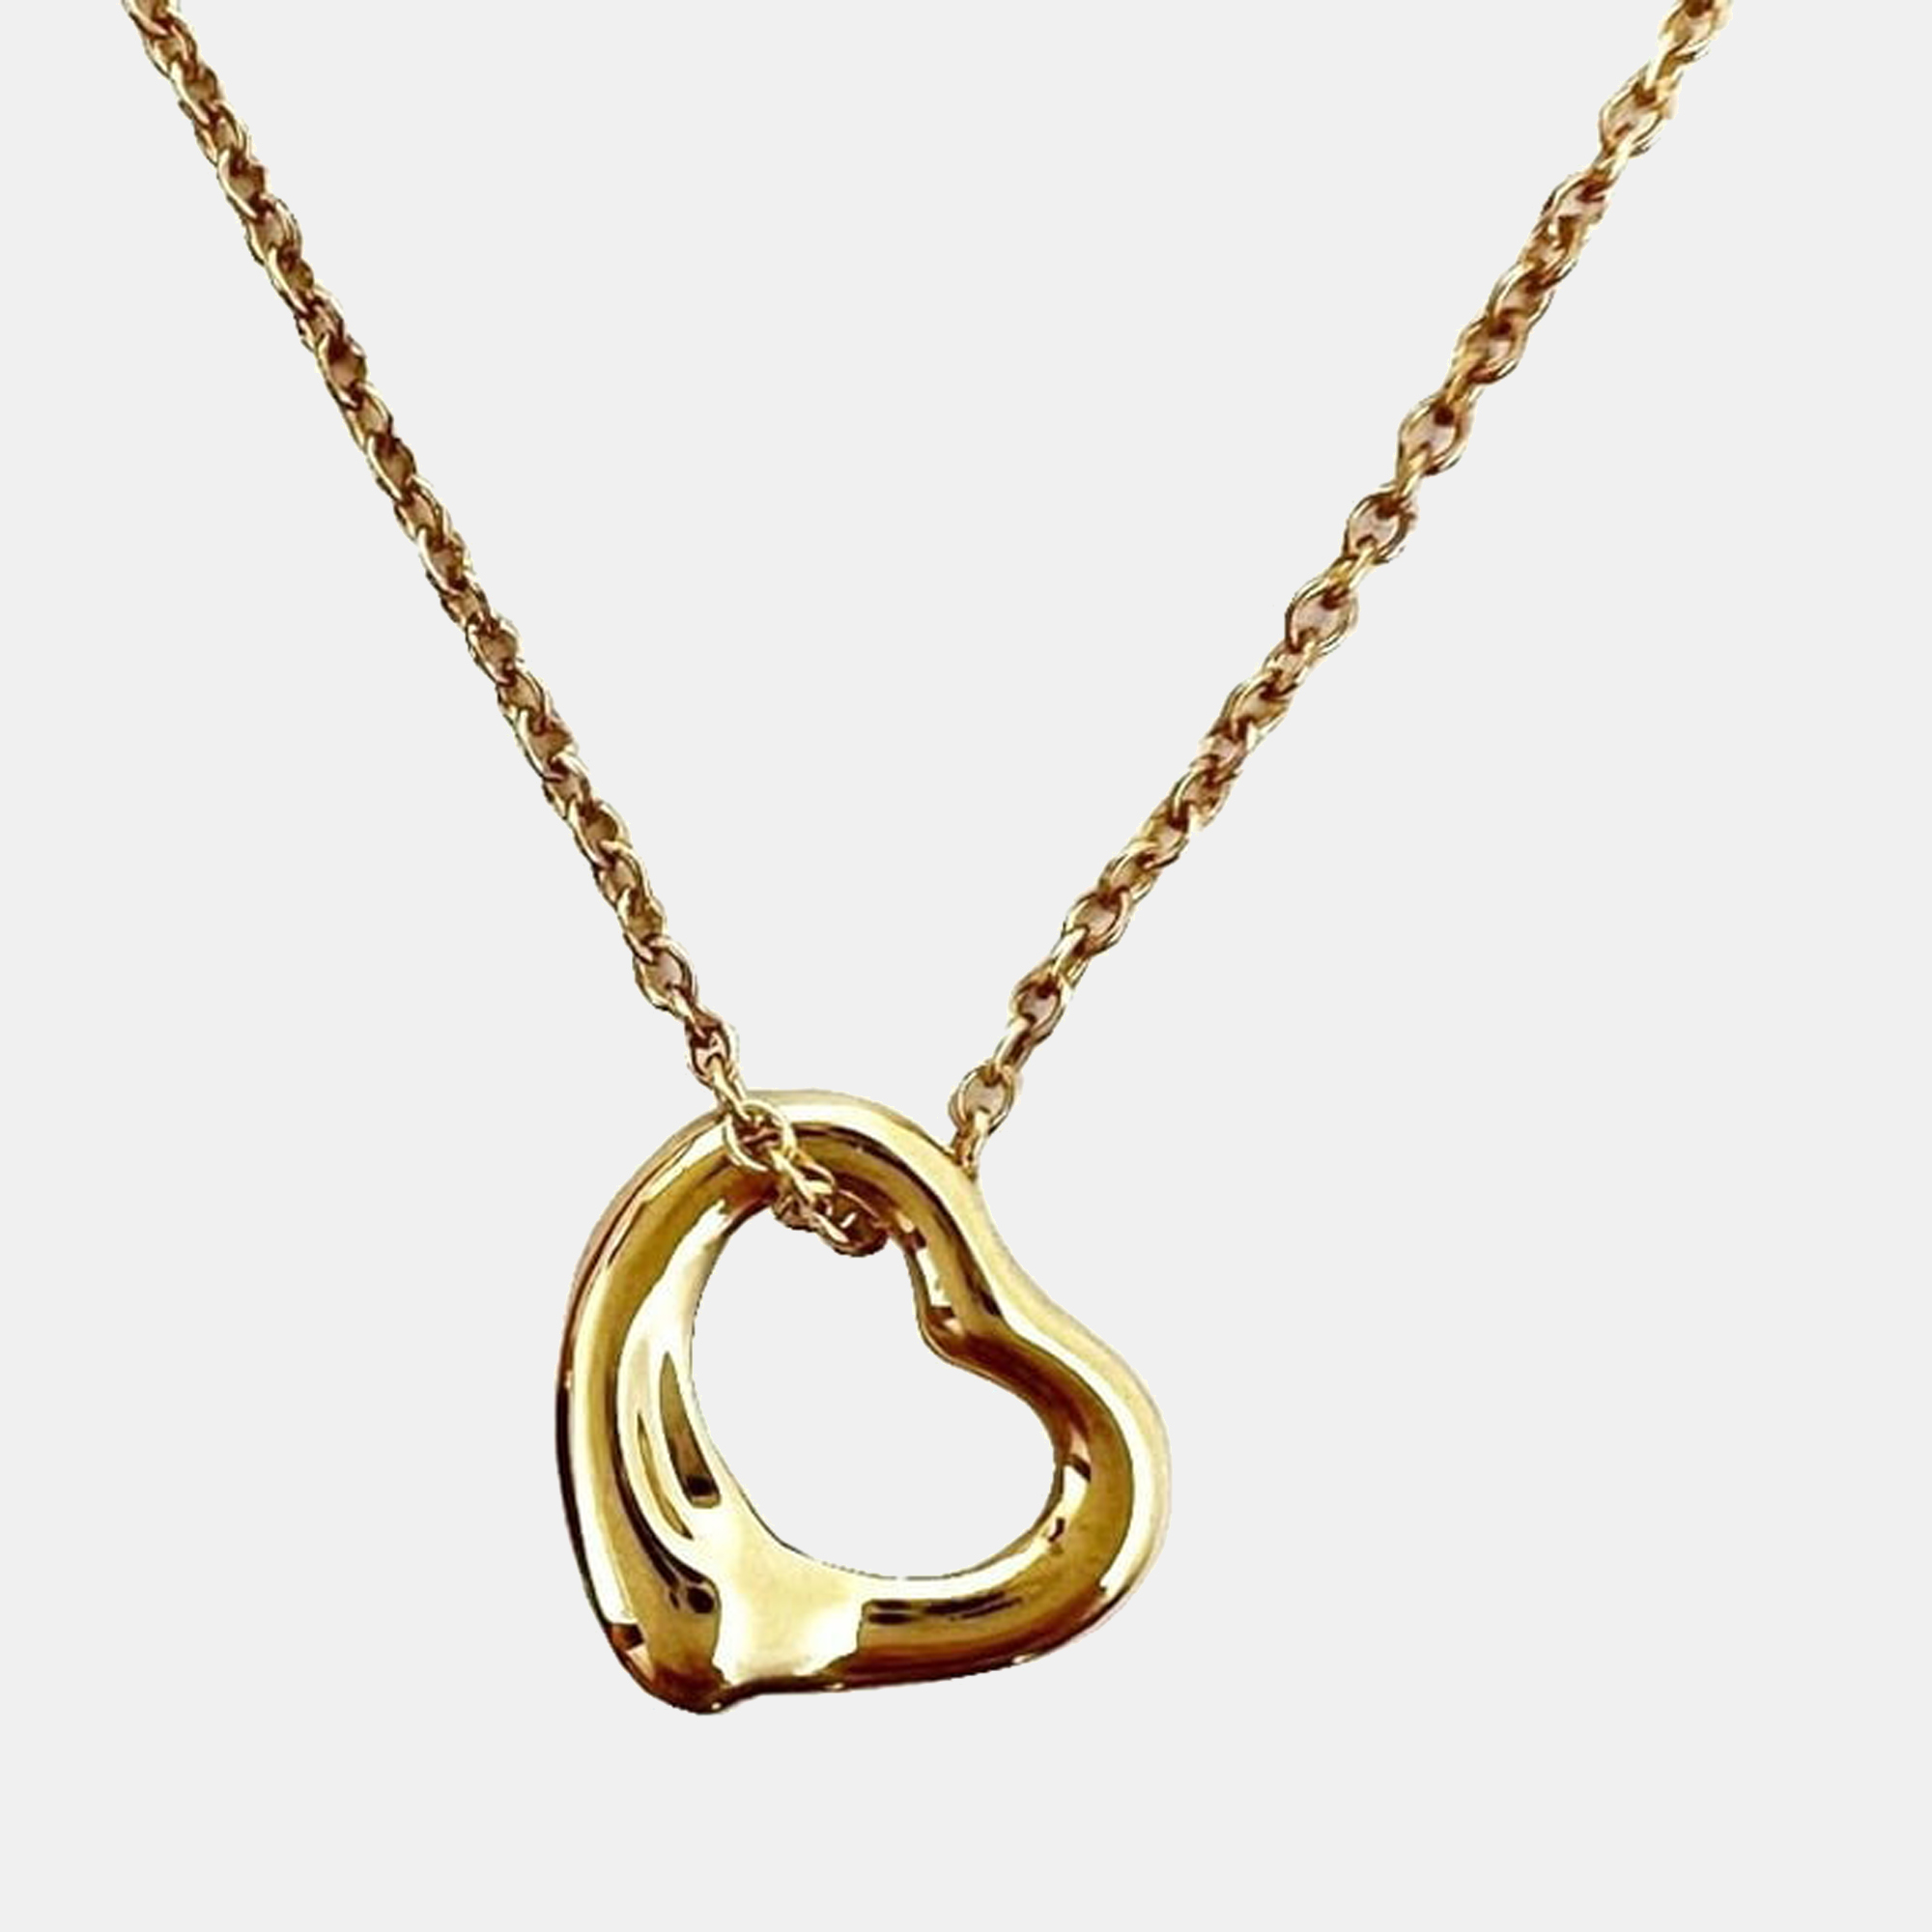 Tiffany & Co. Elsa Peretti Open Heart 18K Yellow Gold Necklace